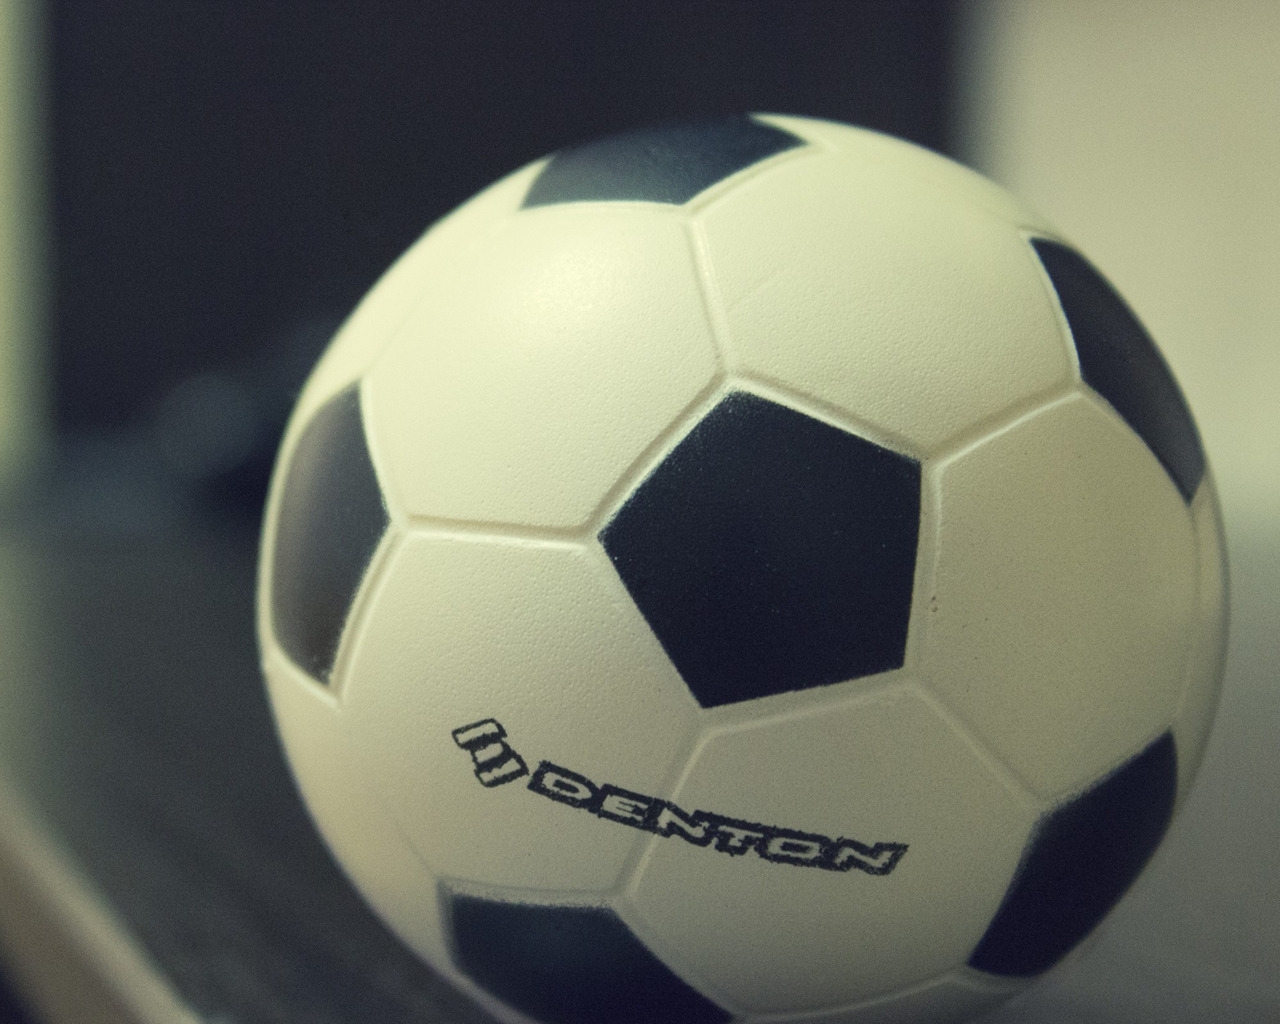 Denton Soccer Ball for 1280 x 1024 resolution